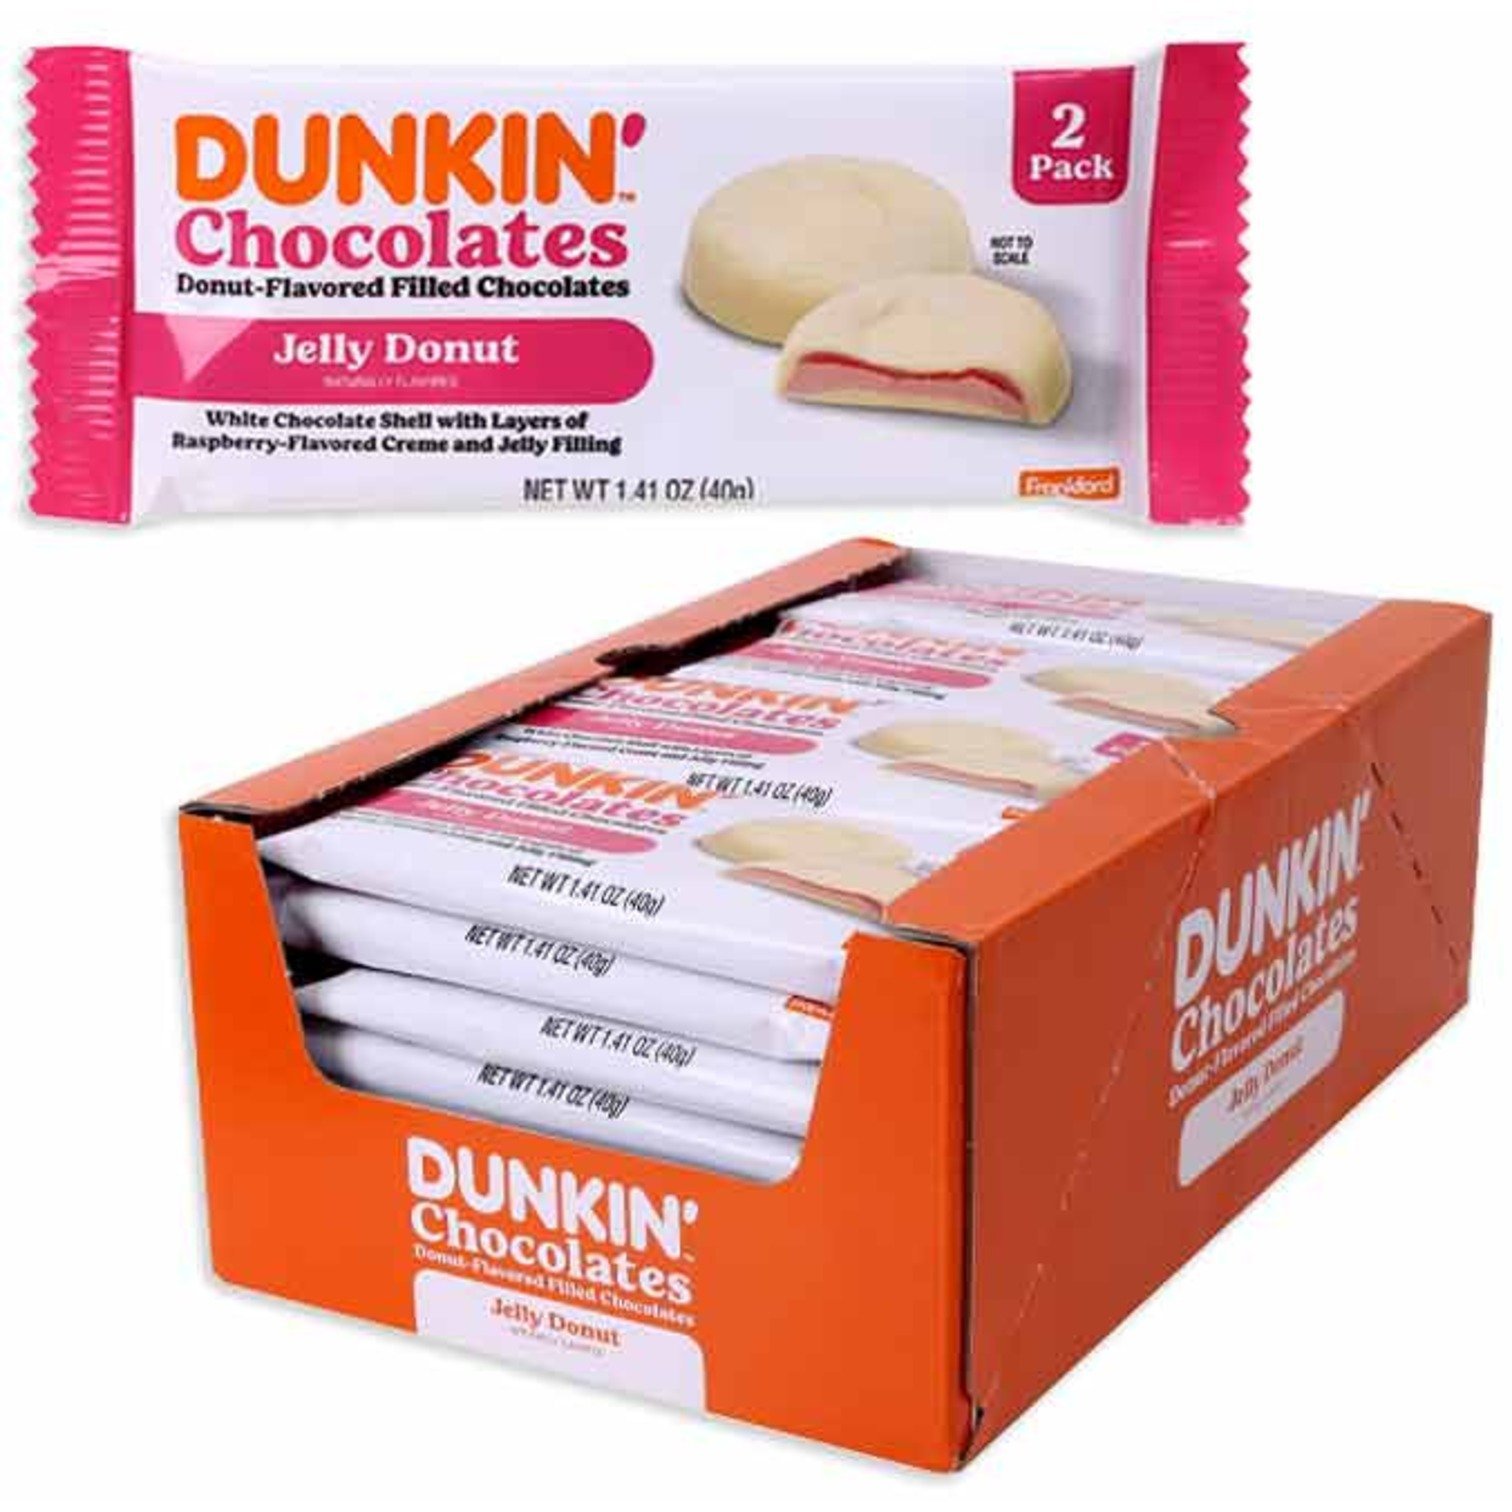 Dunkin’ Chocolates Jelly Donut 2pack